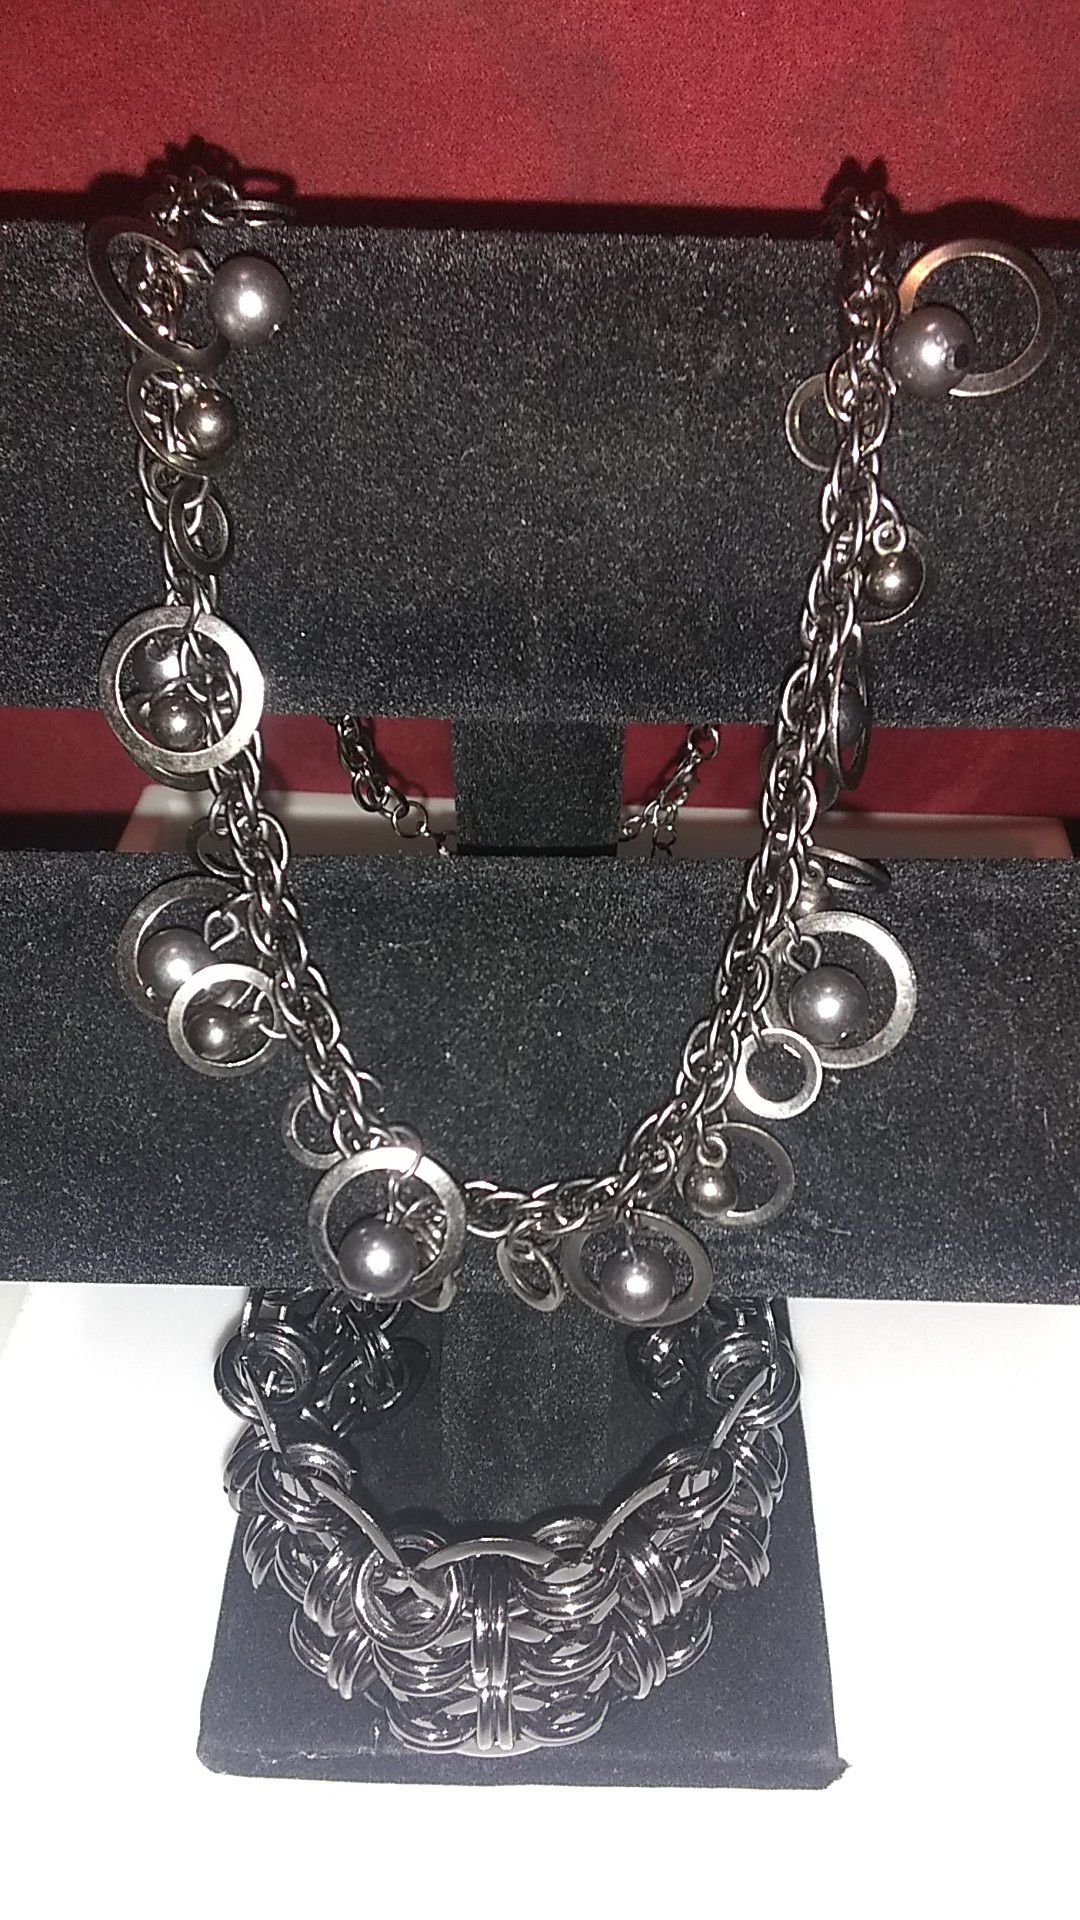 Black gun metal necklace and cuff bracelet